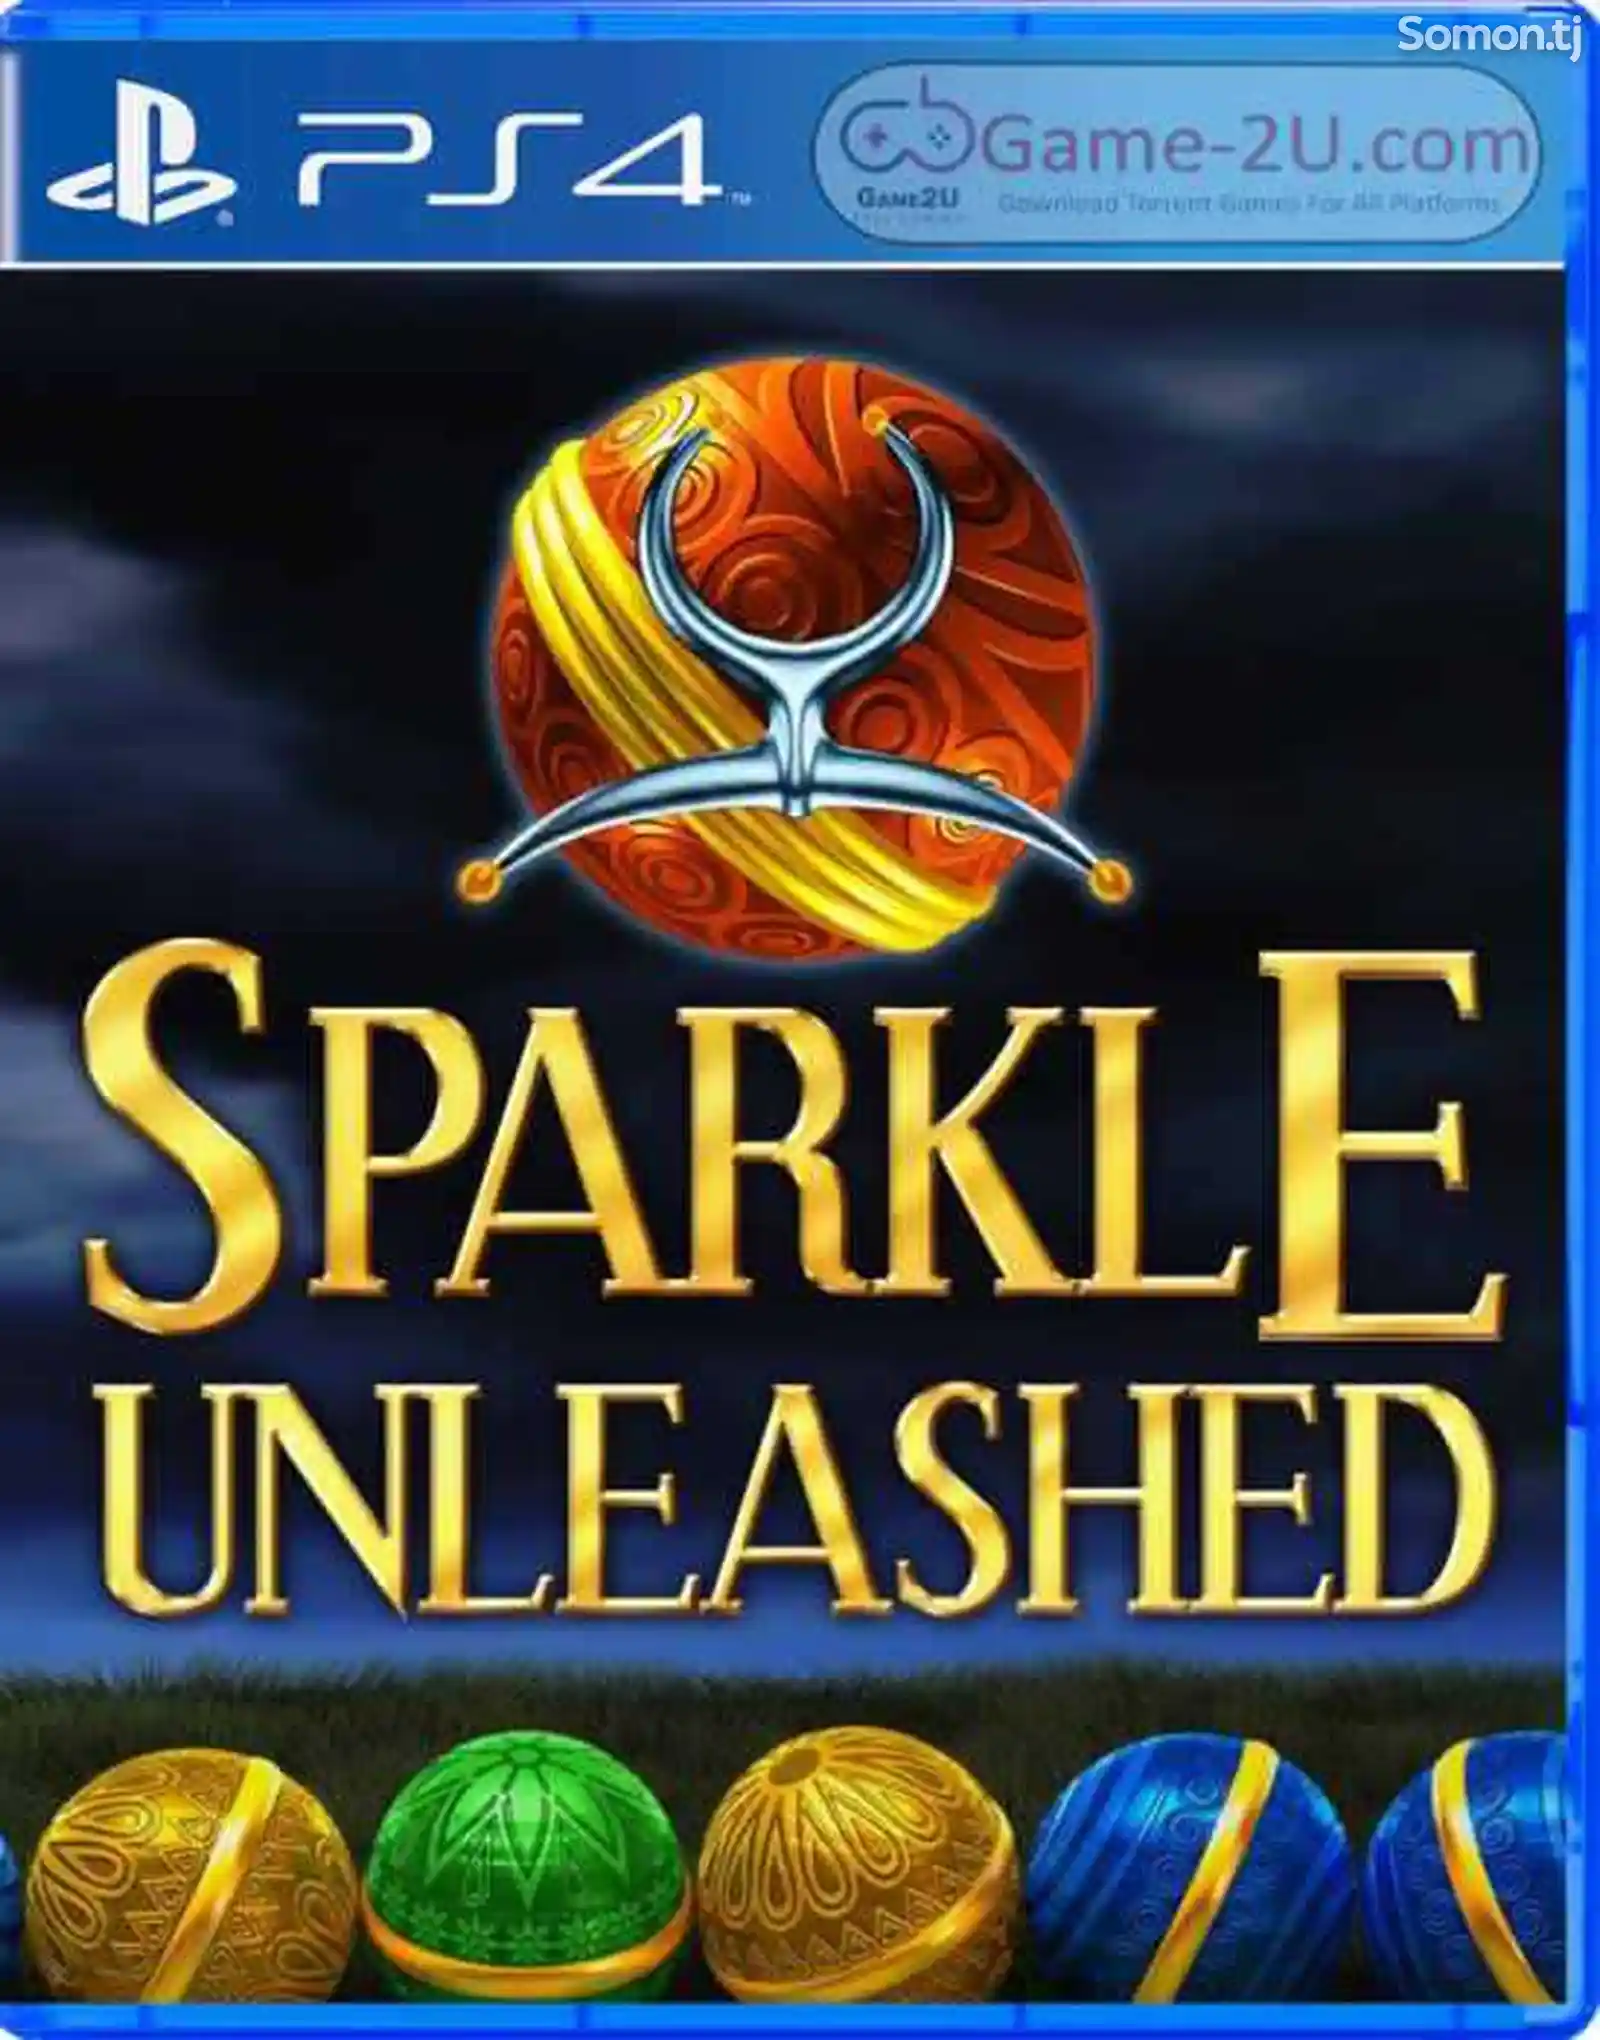 Игра Sparkle unleashed для PS-4 / 5.05 / 6.72 / 7.02 / 7.55 / 9.00 /-1